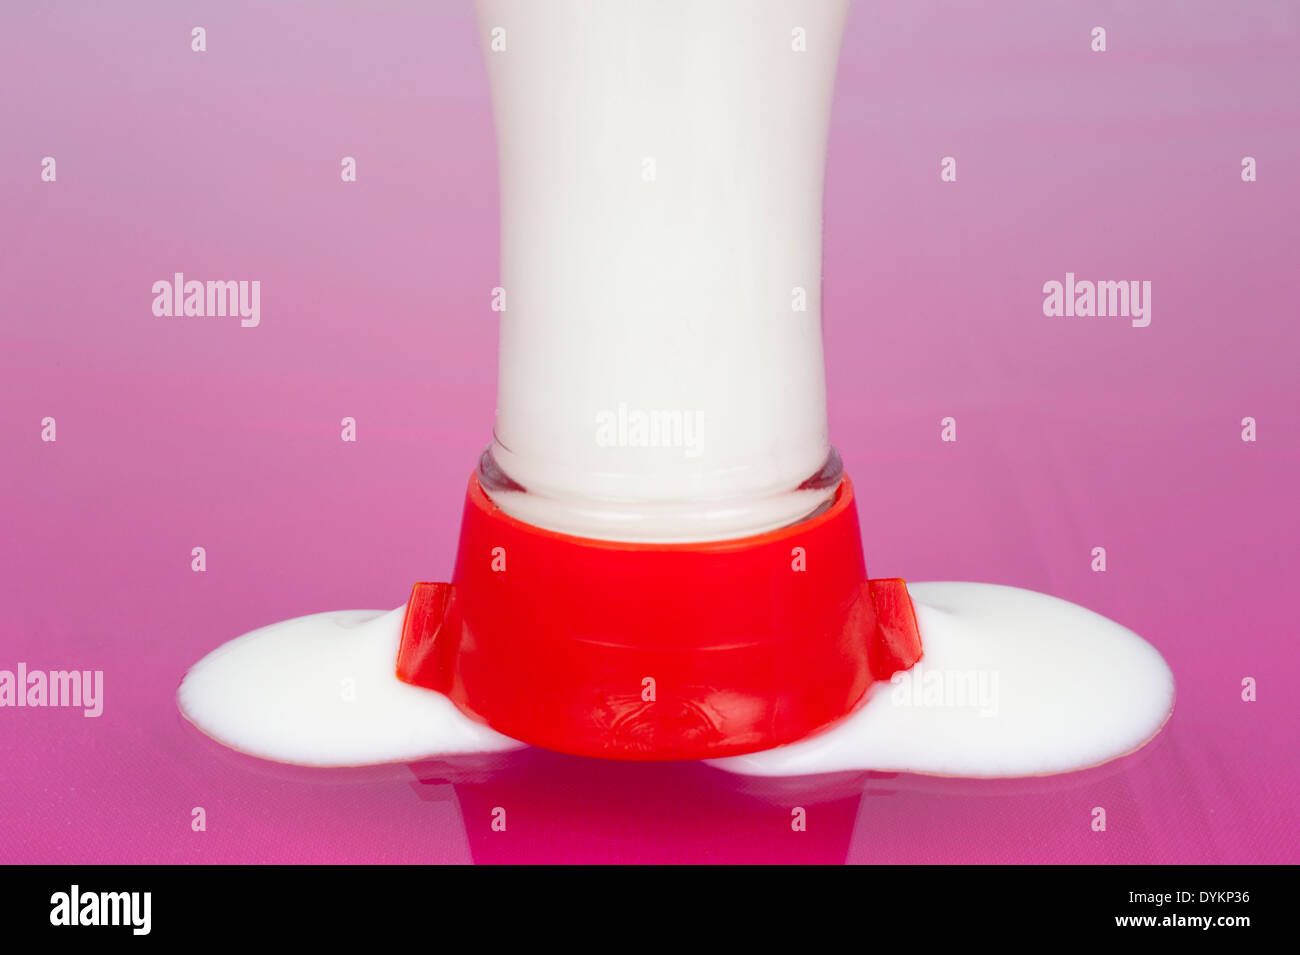 https://c8.alamy.com/comp/DYKP36/milk-filled-bottle-running-empty-on-pink-floor-DYKP36.jpg